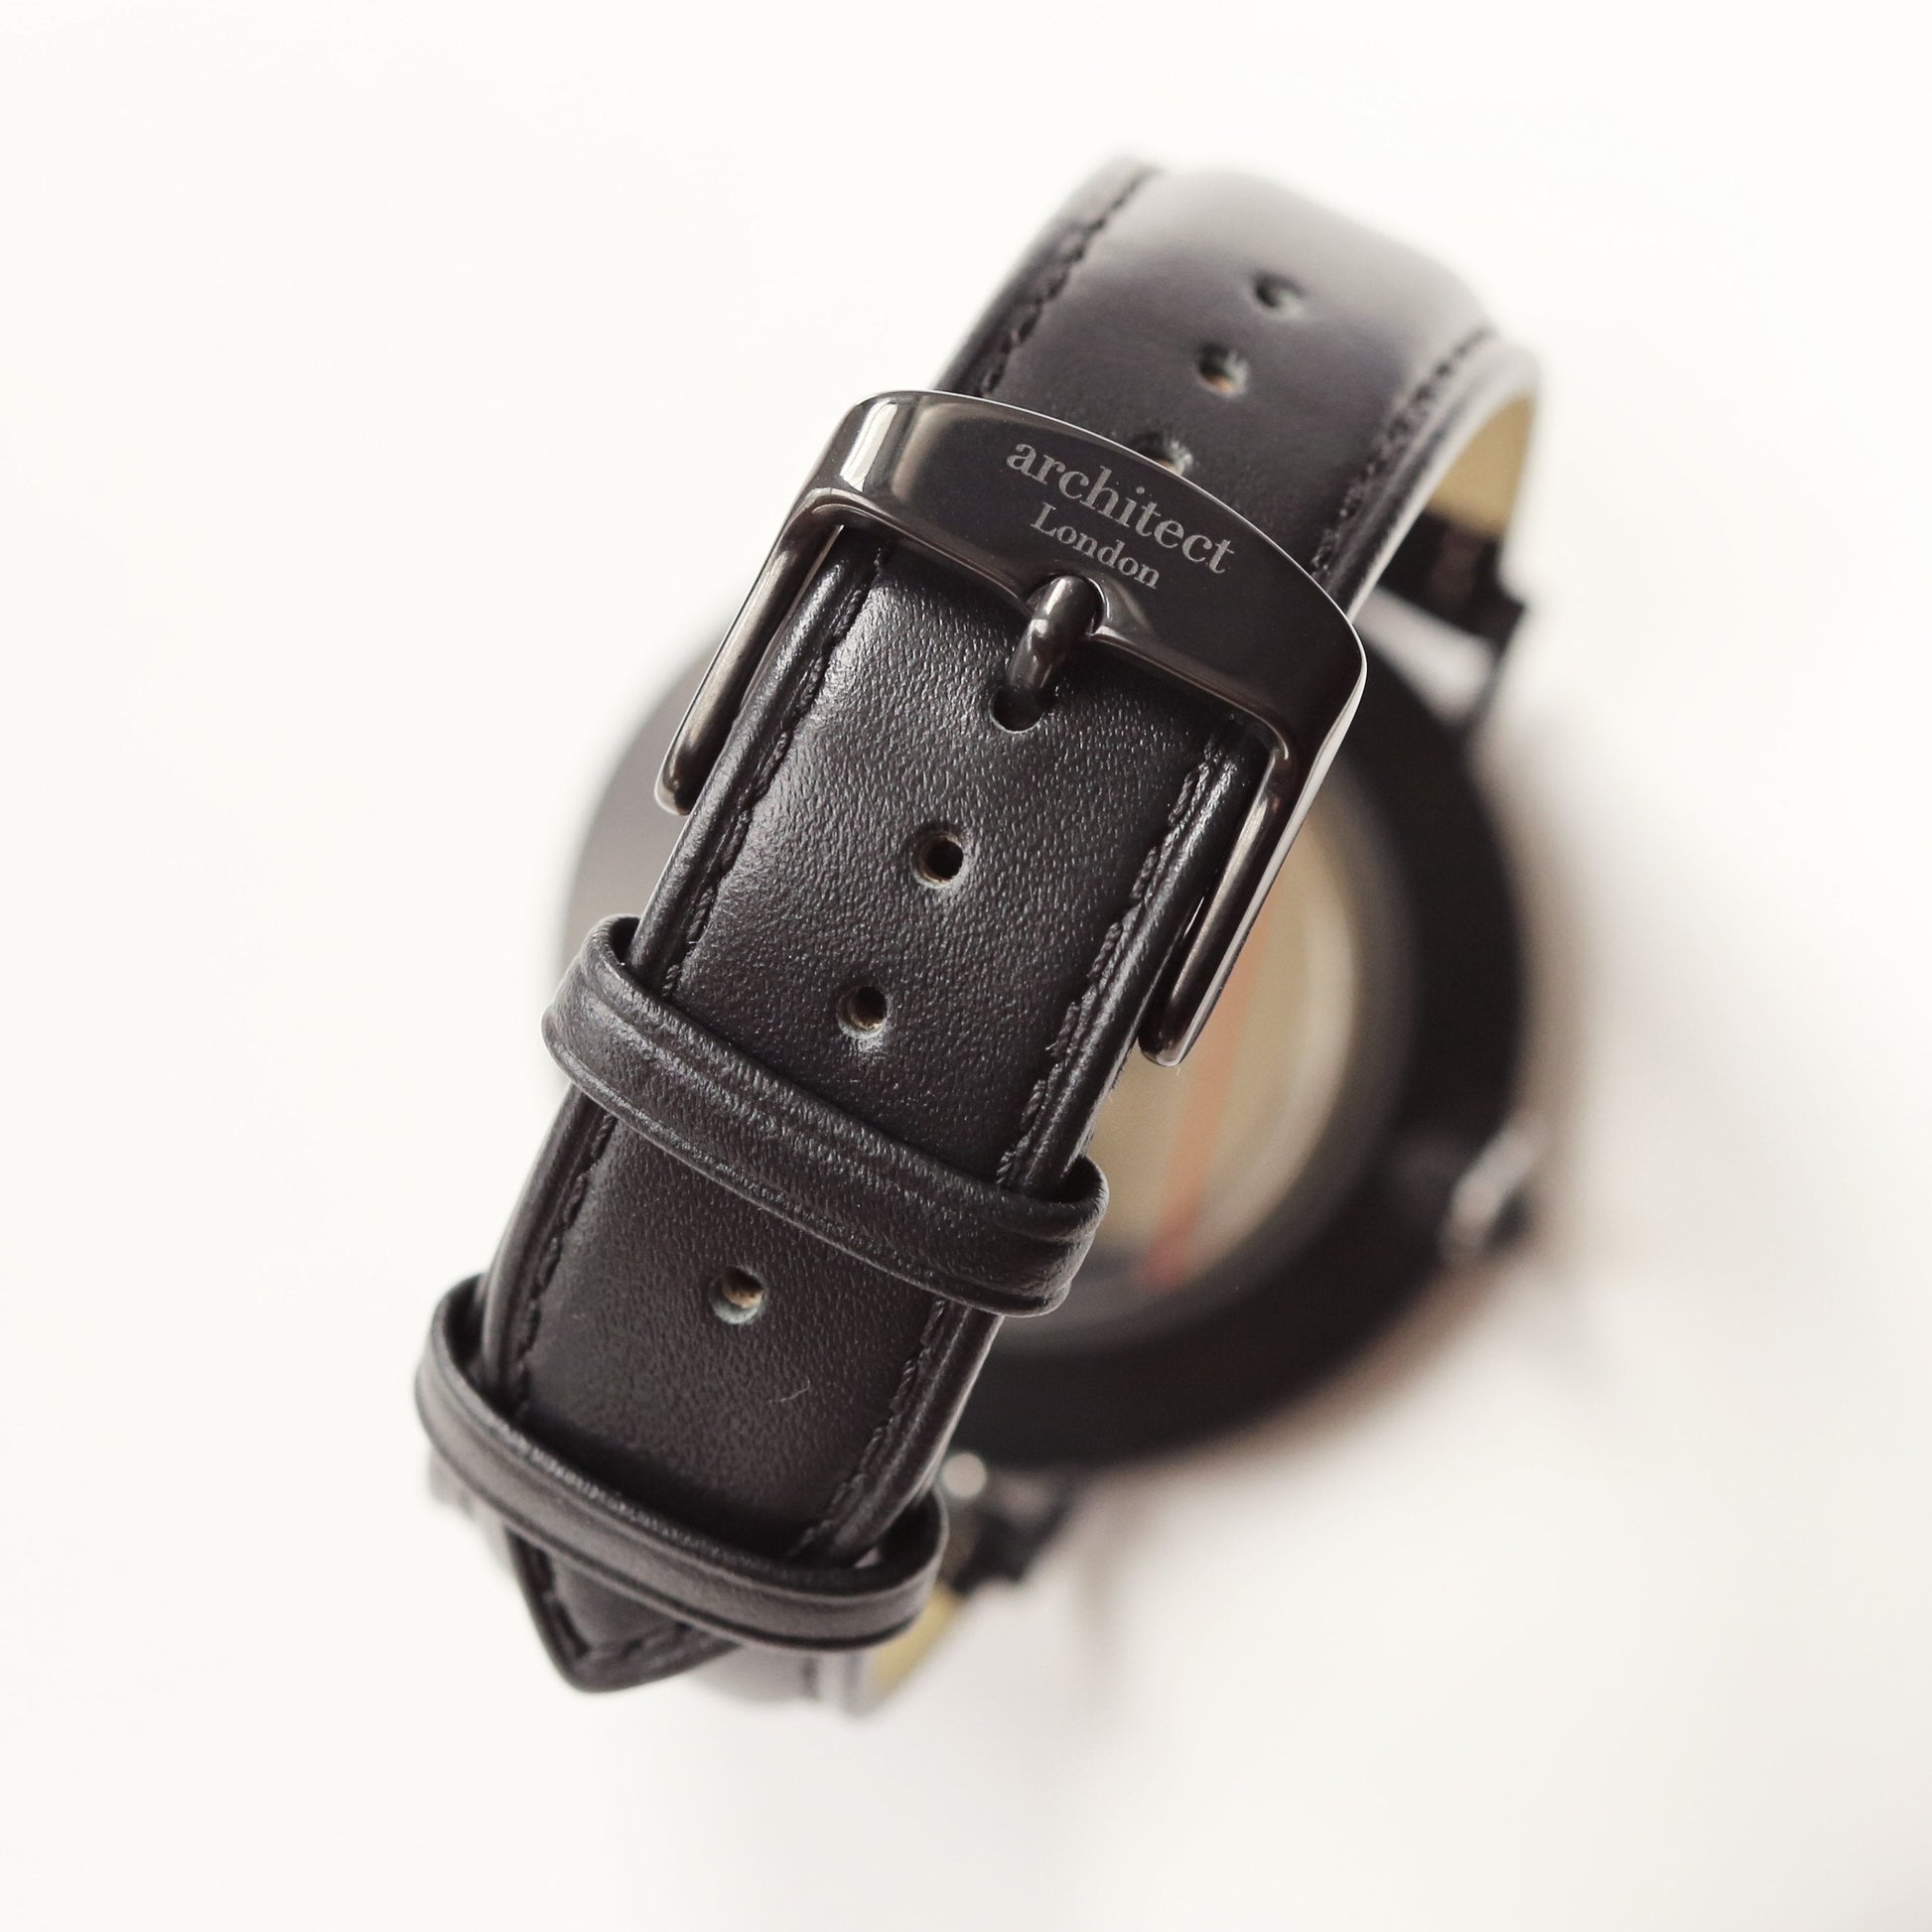 Personalized Men's Watches - Men's Handwriting Engraved Watch - Minimalist Watch + Jet Black 